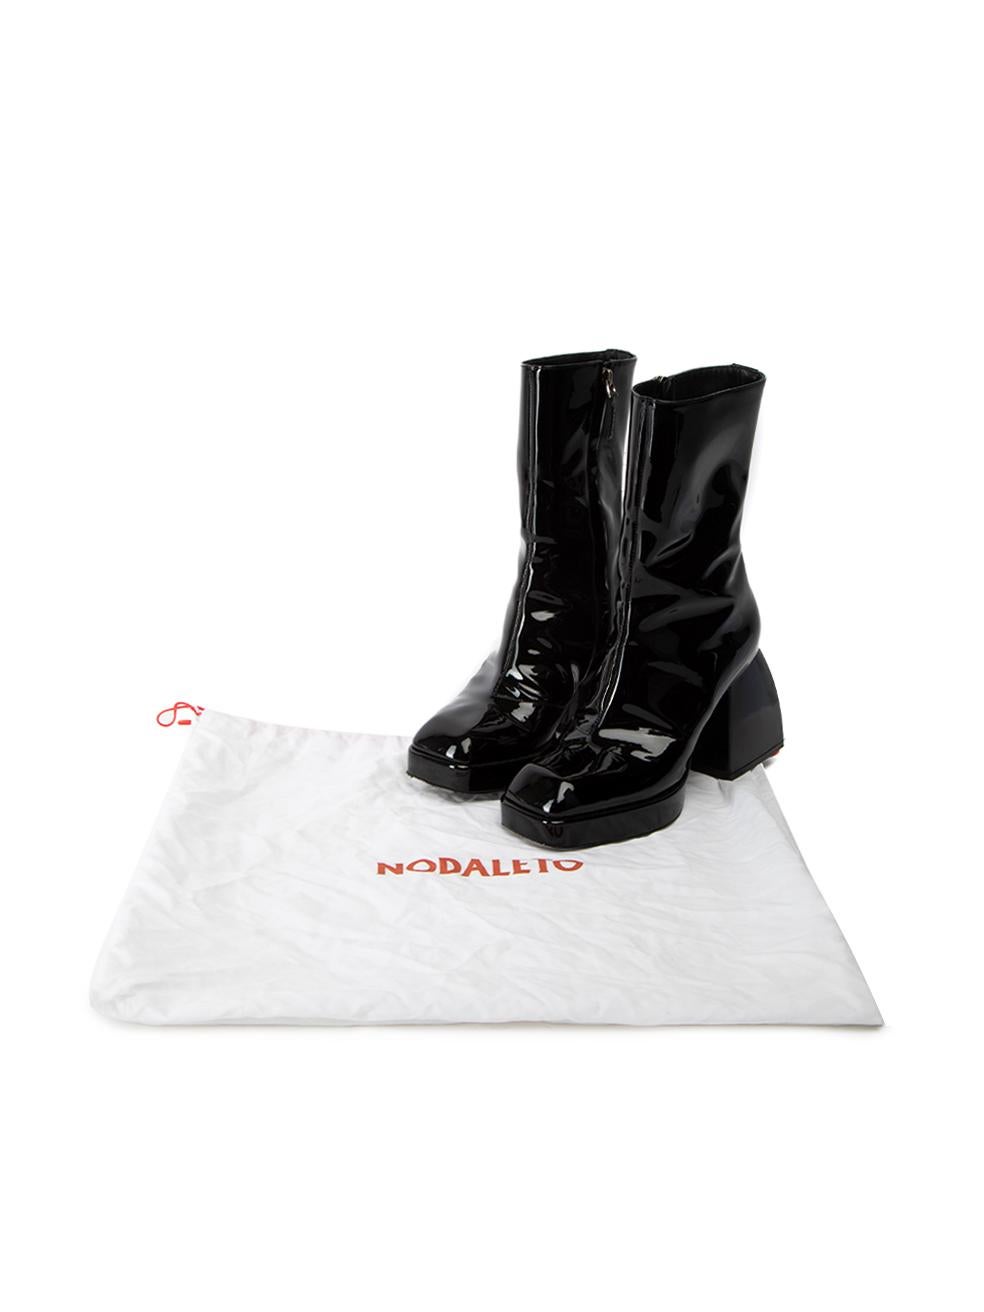 Nodaleto Black Patent Leather Square Toe Boots Size IT 36 2